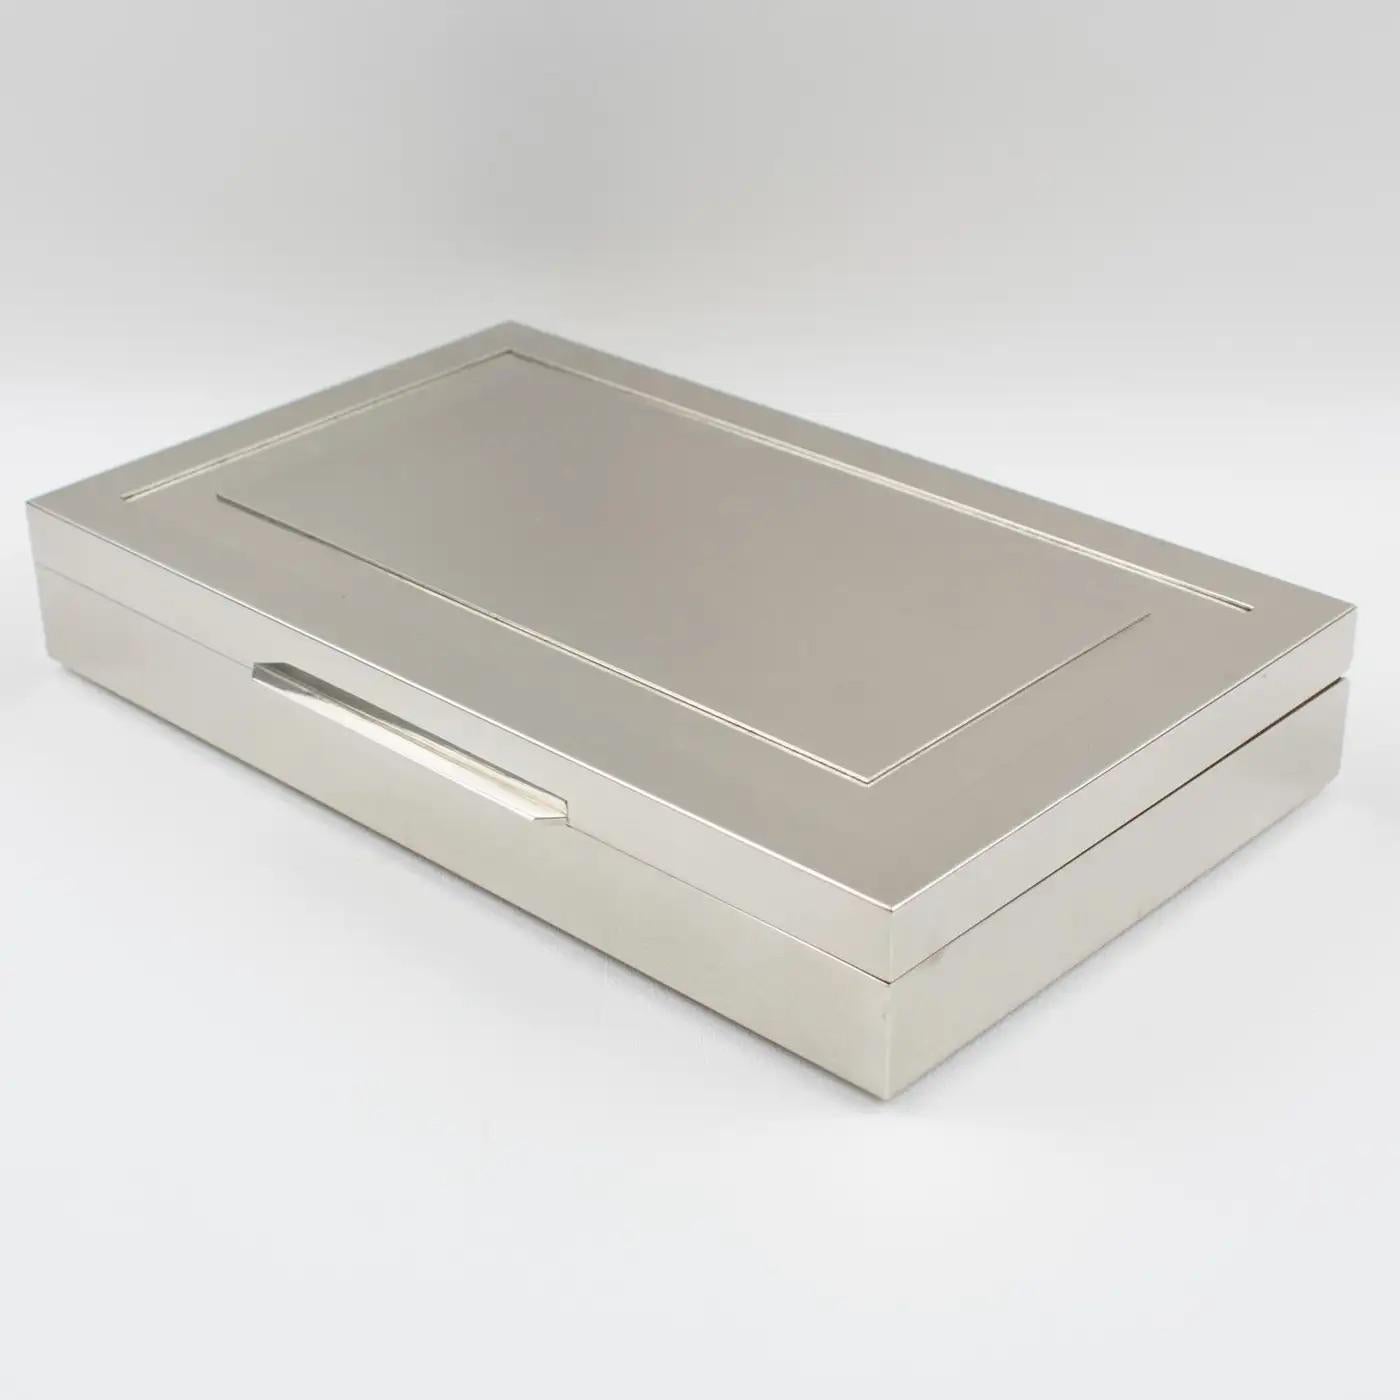 Late 20th Century Giacomo Sinopoli for Liwan's Rome Modernist Chrome Metal Box, Italy 1970s For Sale